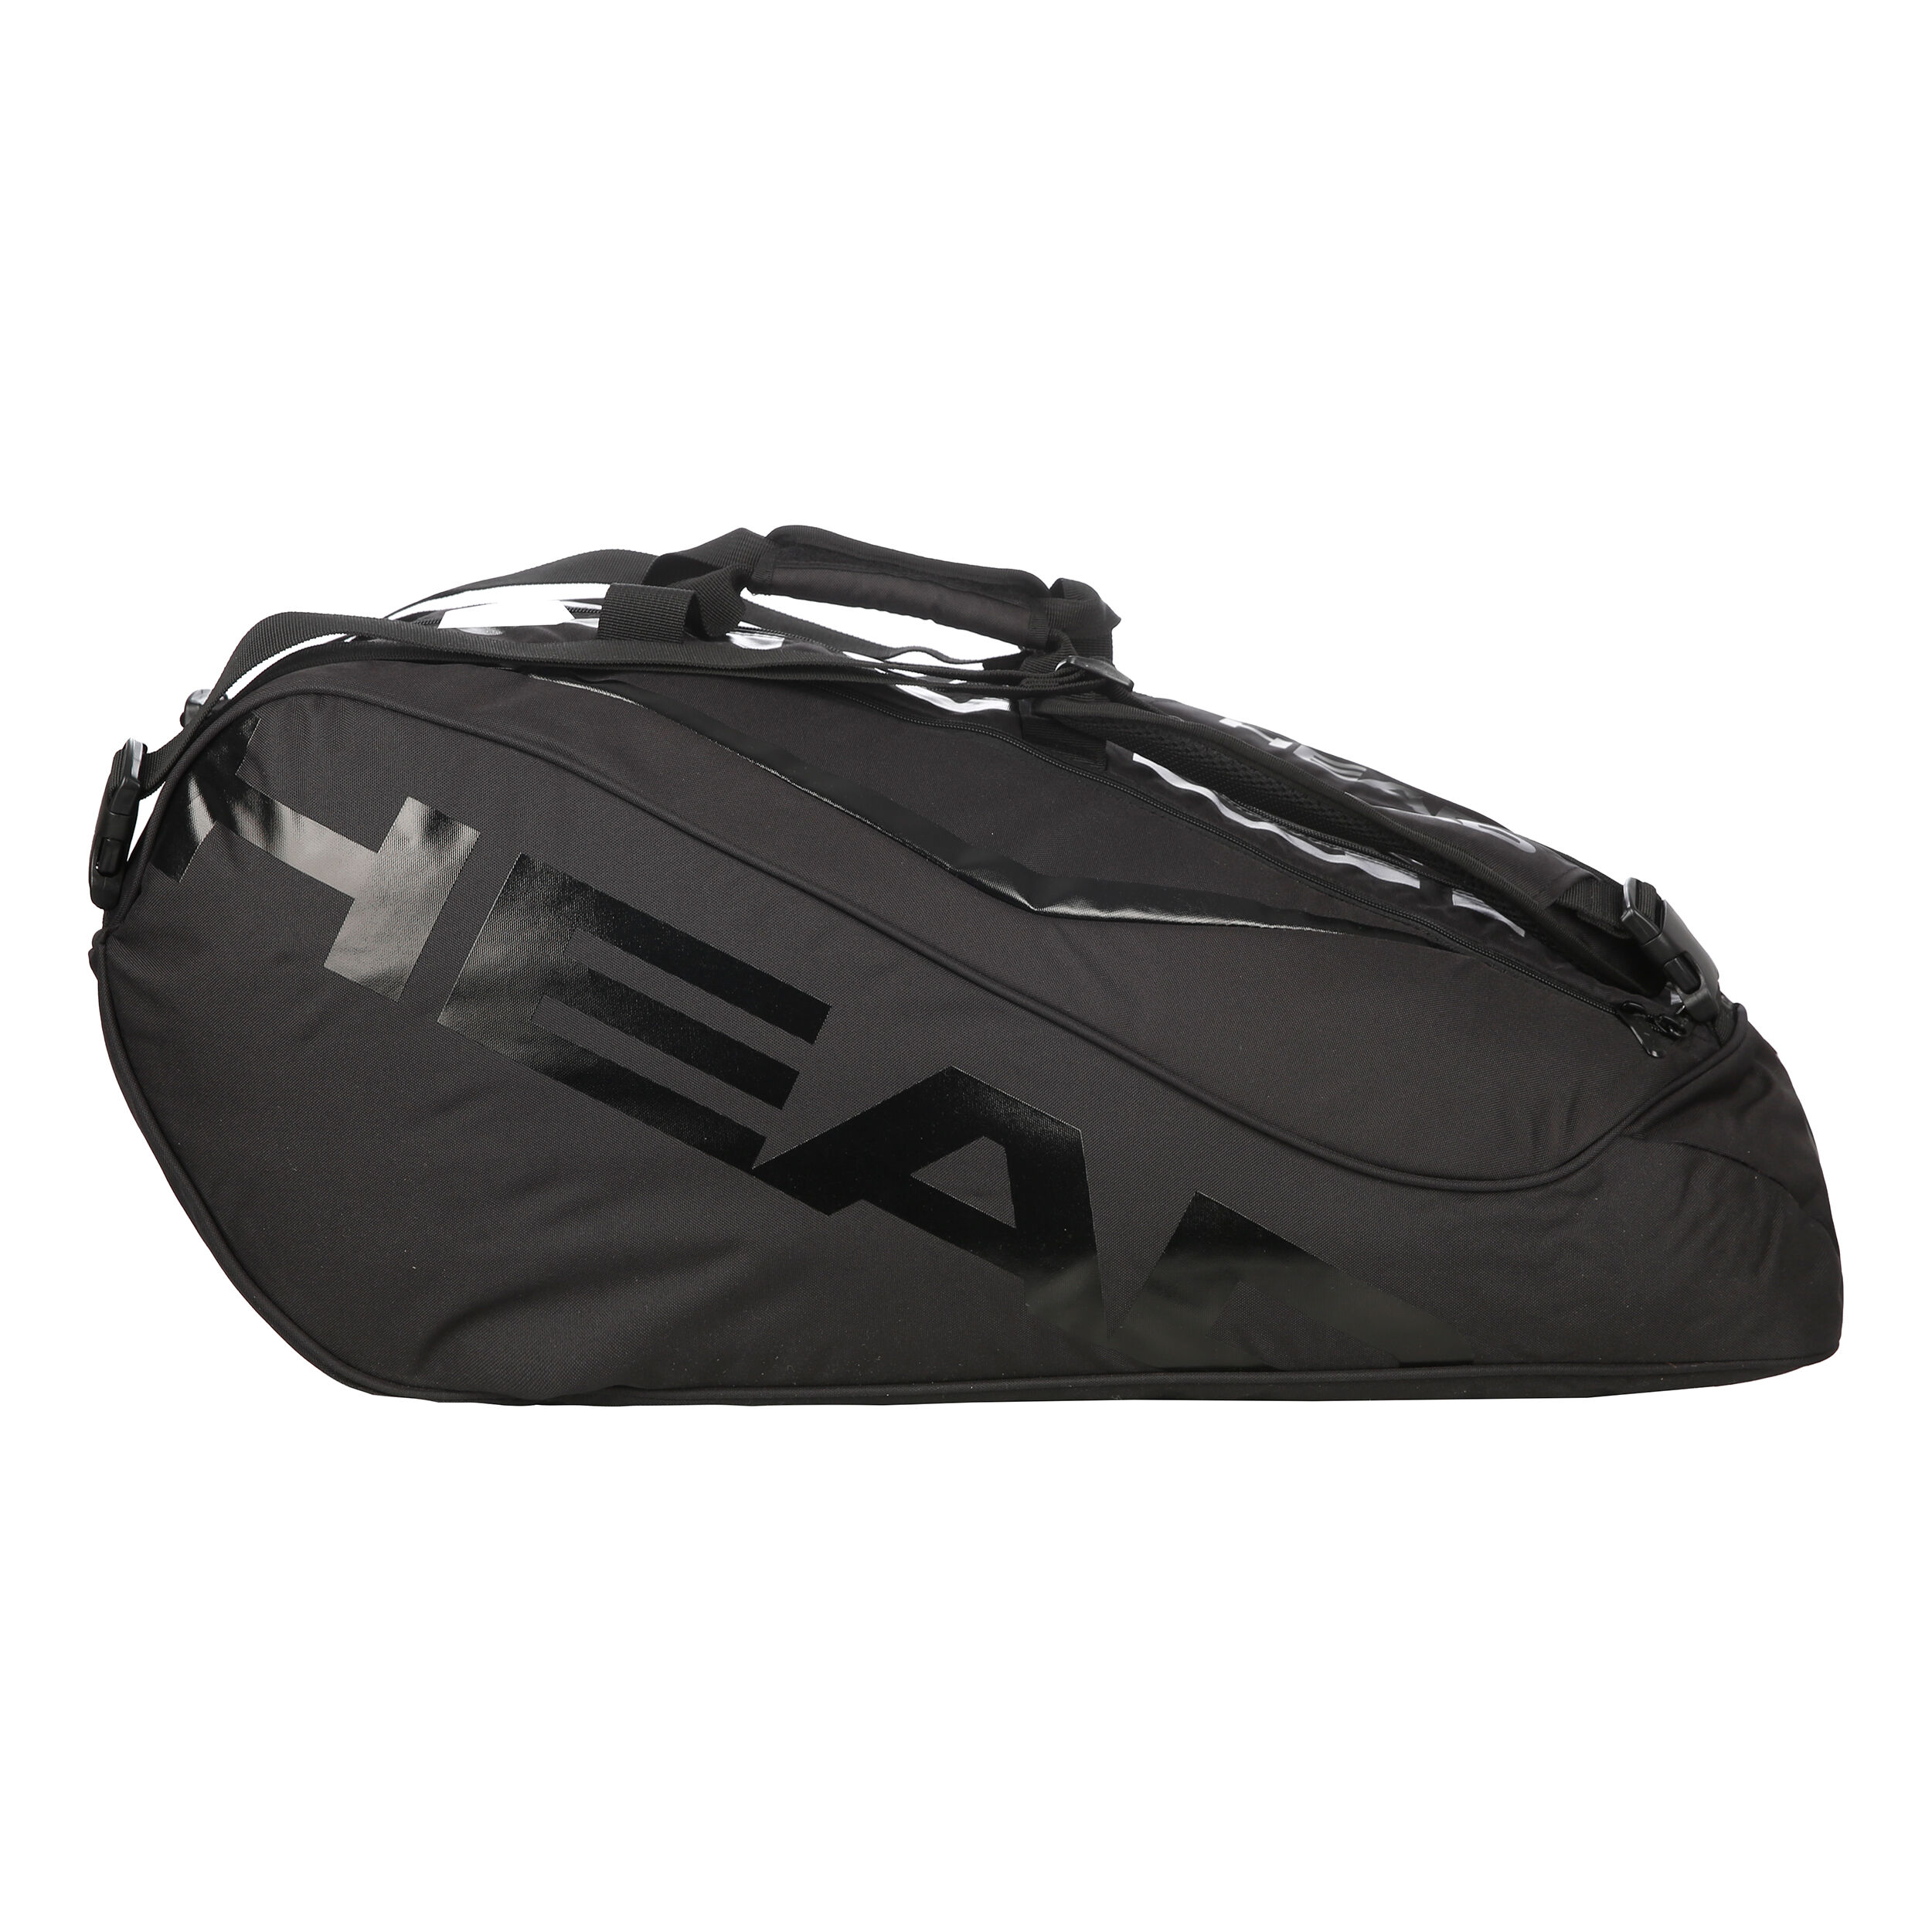 Team 12R Monstercombi Racket Bag Special Edition - Black